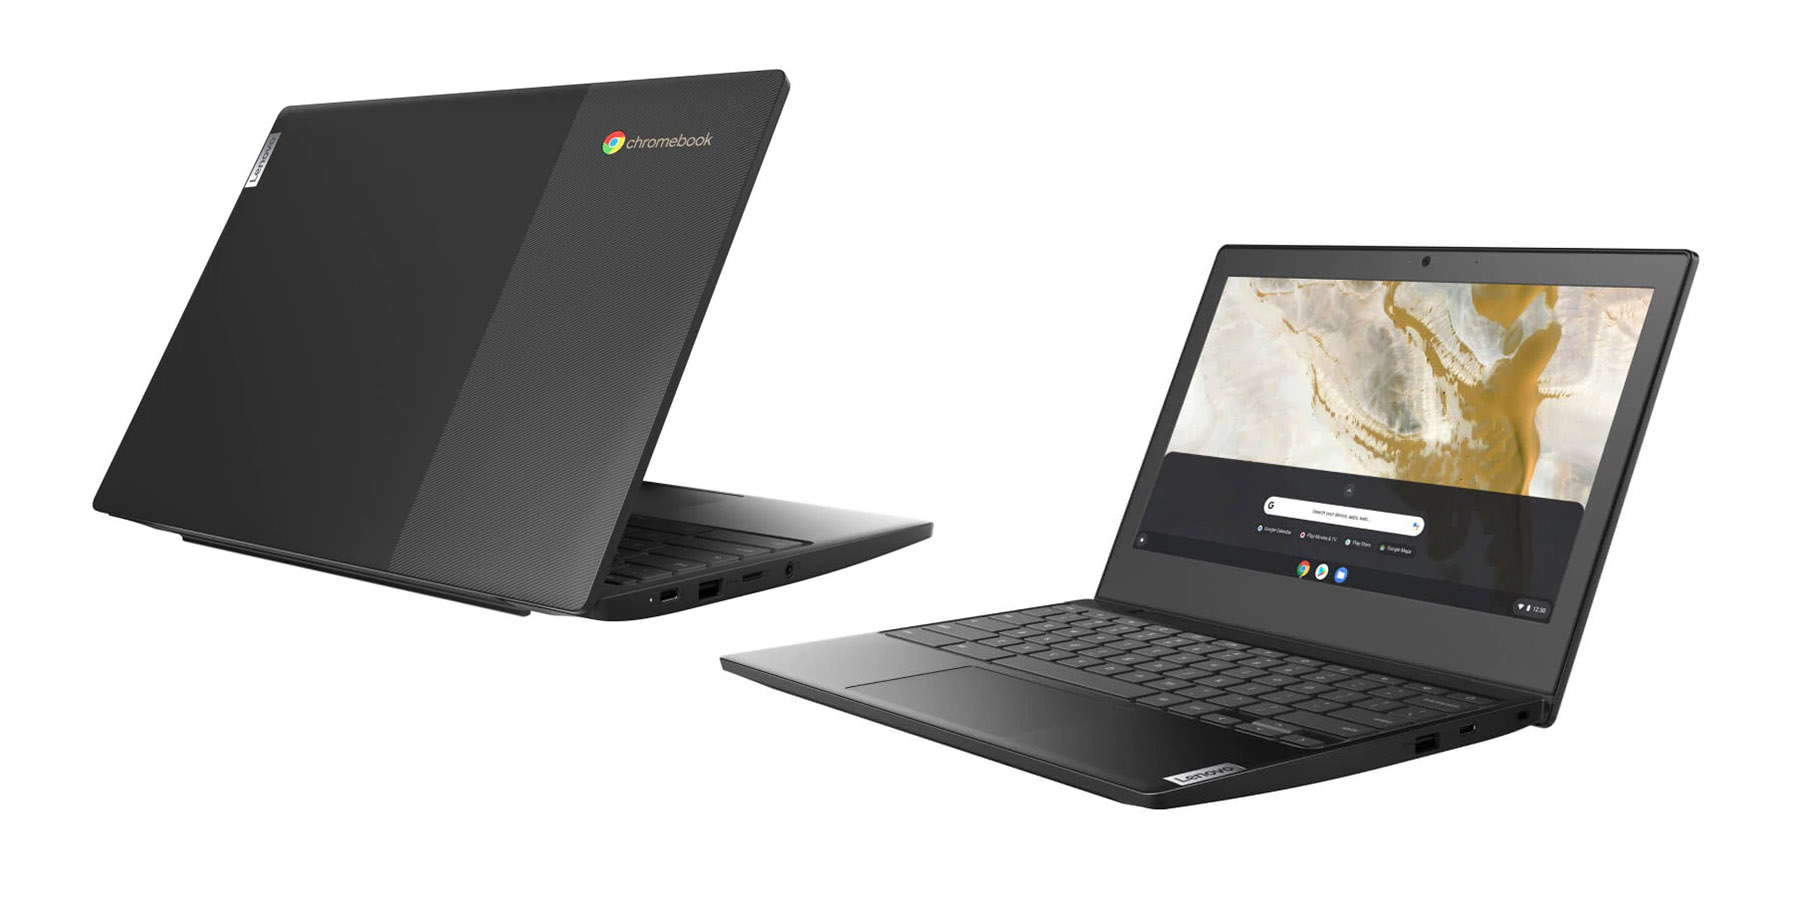 Lenovo Chromebook 3 has 11-inch display, $229 price - 9to5Google